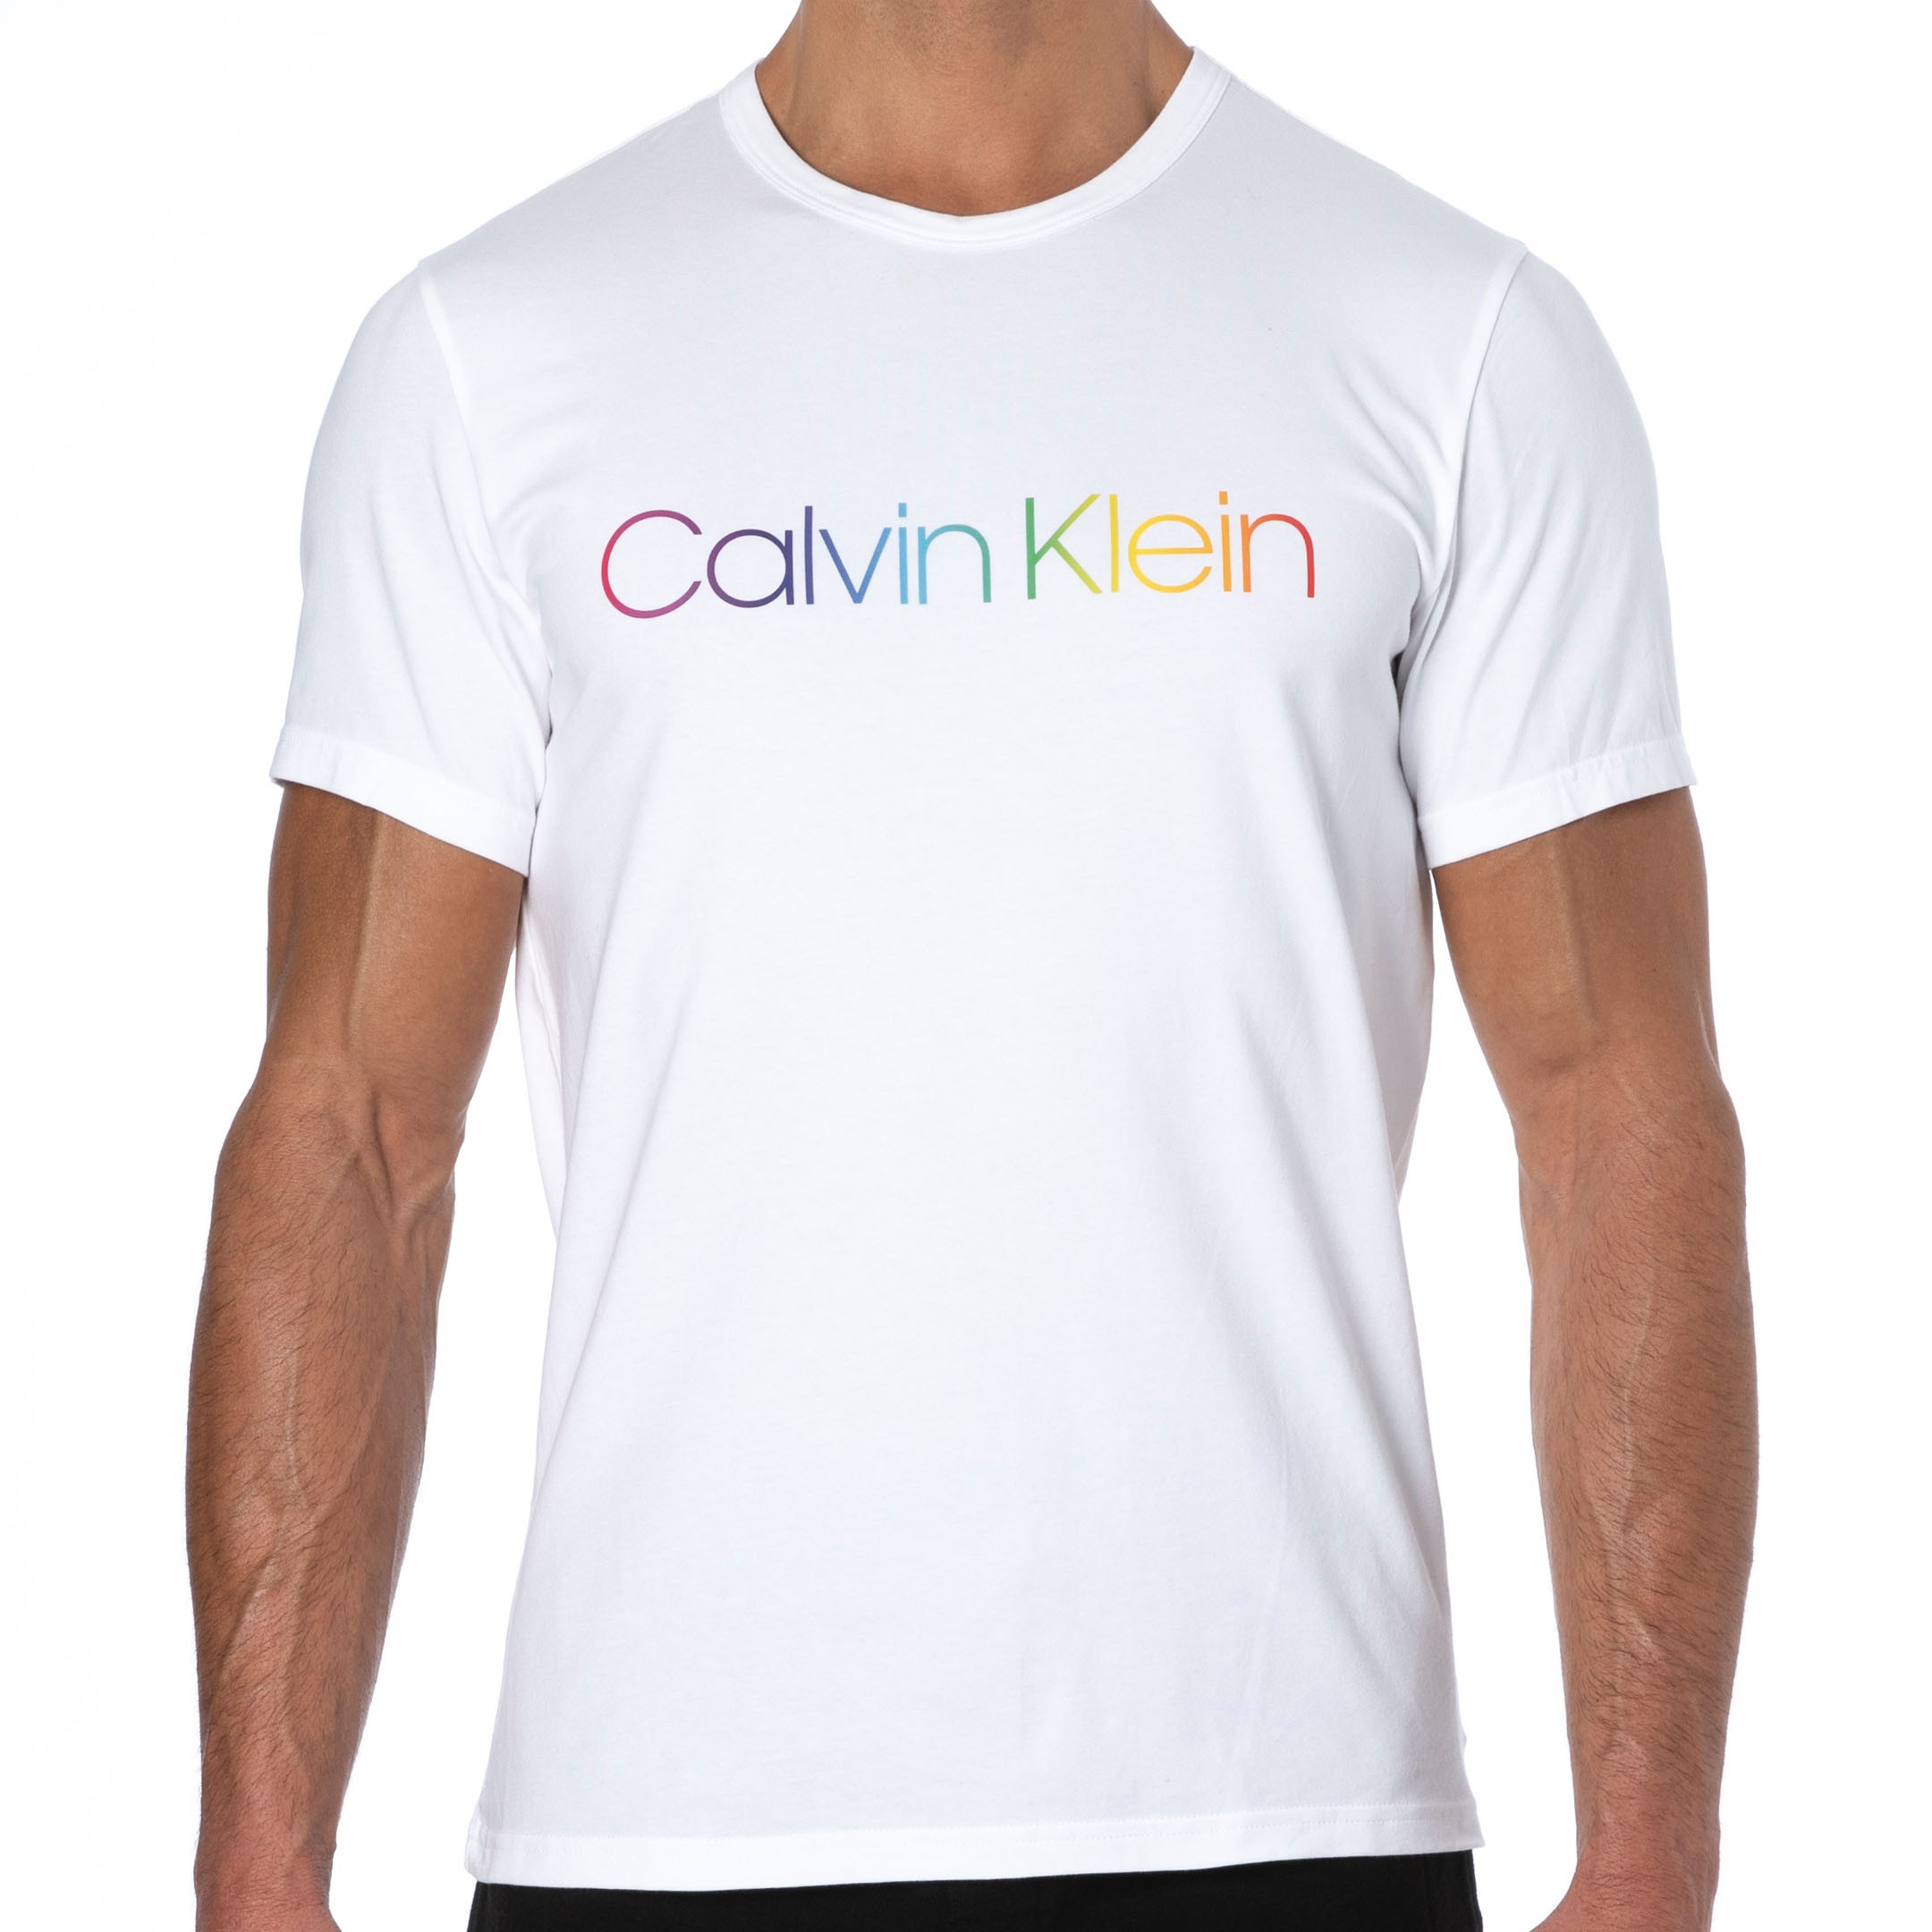 Klein Shirt Cheap Sale, SAVE 57% - mpgc.net